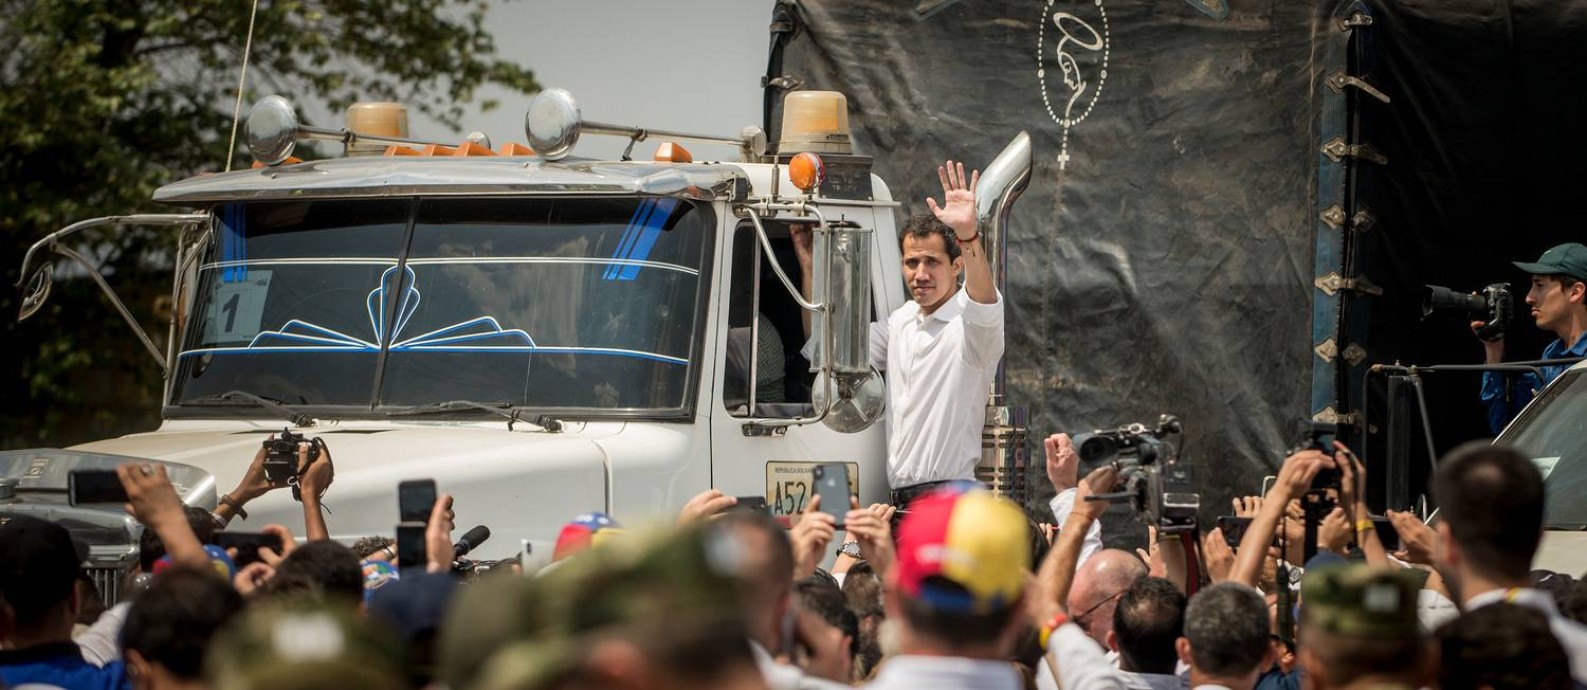 O líder opositor Juan Guaidó acena a apoiadores na cidade colombiana de Norte de Santander durante entrega de ajuda humanitária à Venezuela: tentativa de se reeleger hoje Foto: MERIDITH KOHUT / NYT